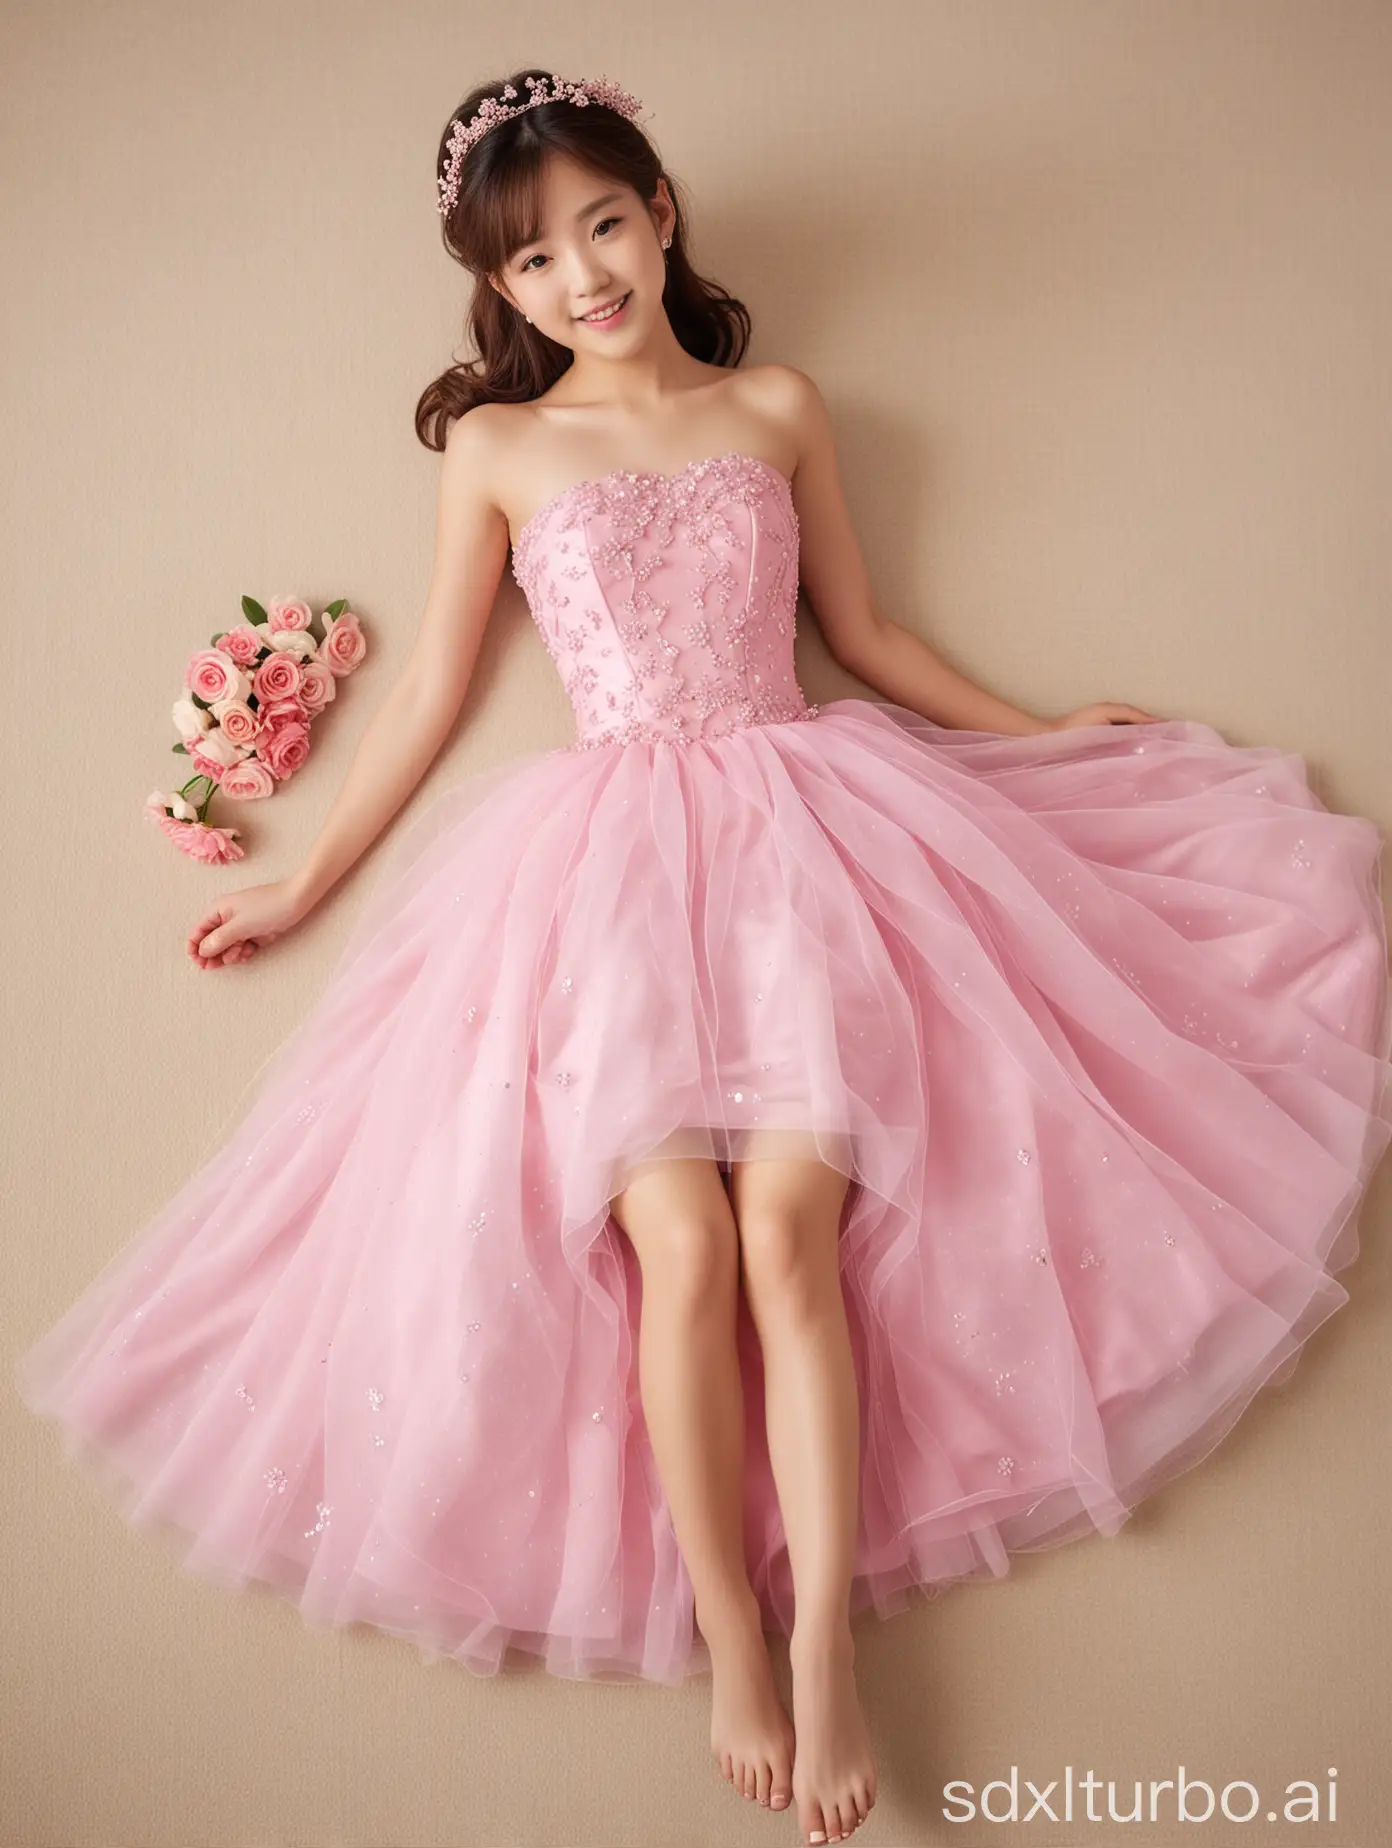 12yo,1girl,Japanese,pink strapless short wedding dress,full body,lying